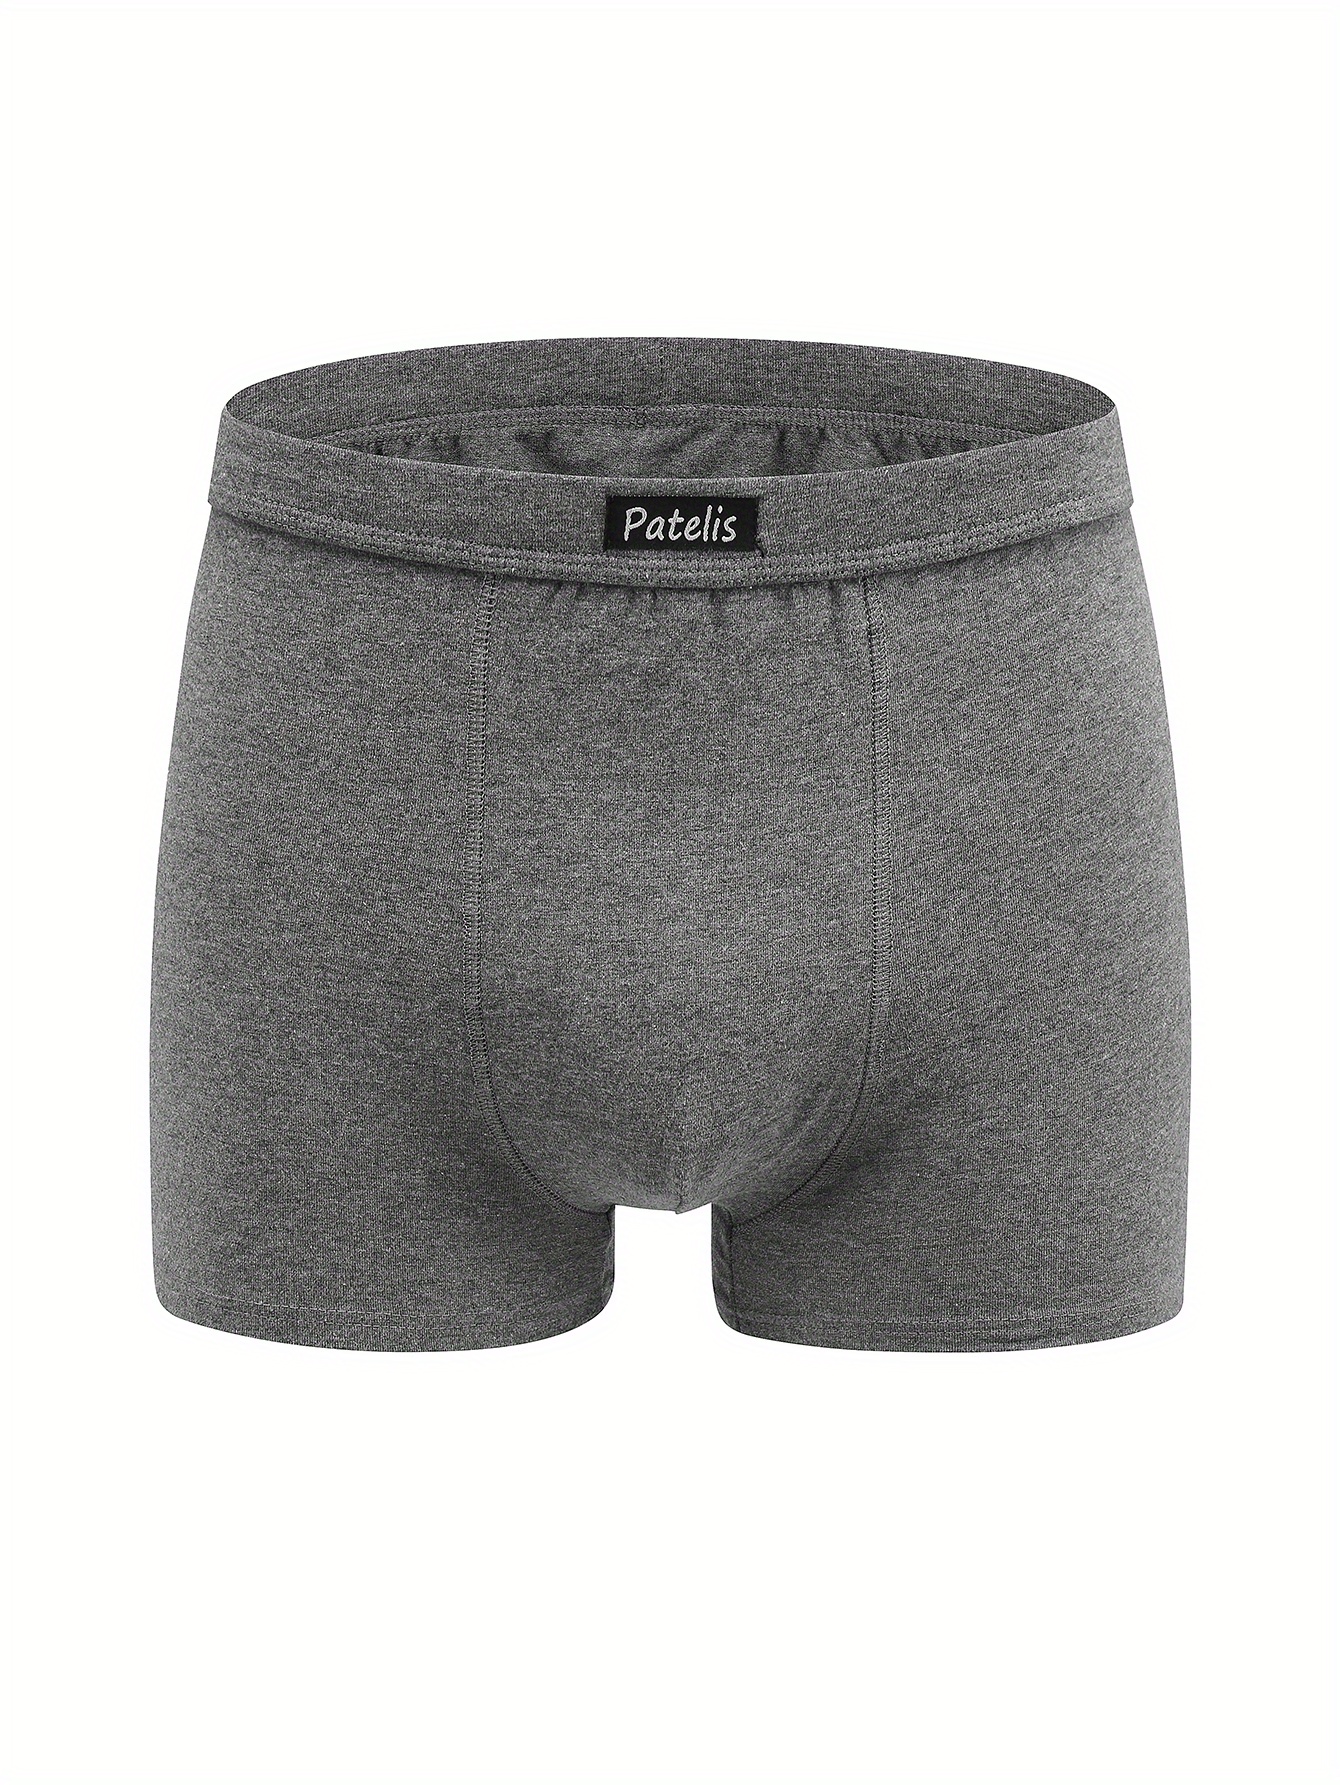 Petrol Men's Basic Underwear Boxer Briefs Cotton Fabric Gray Brief